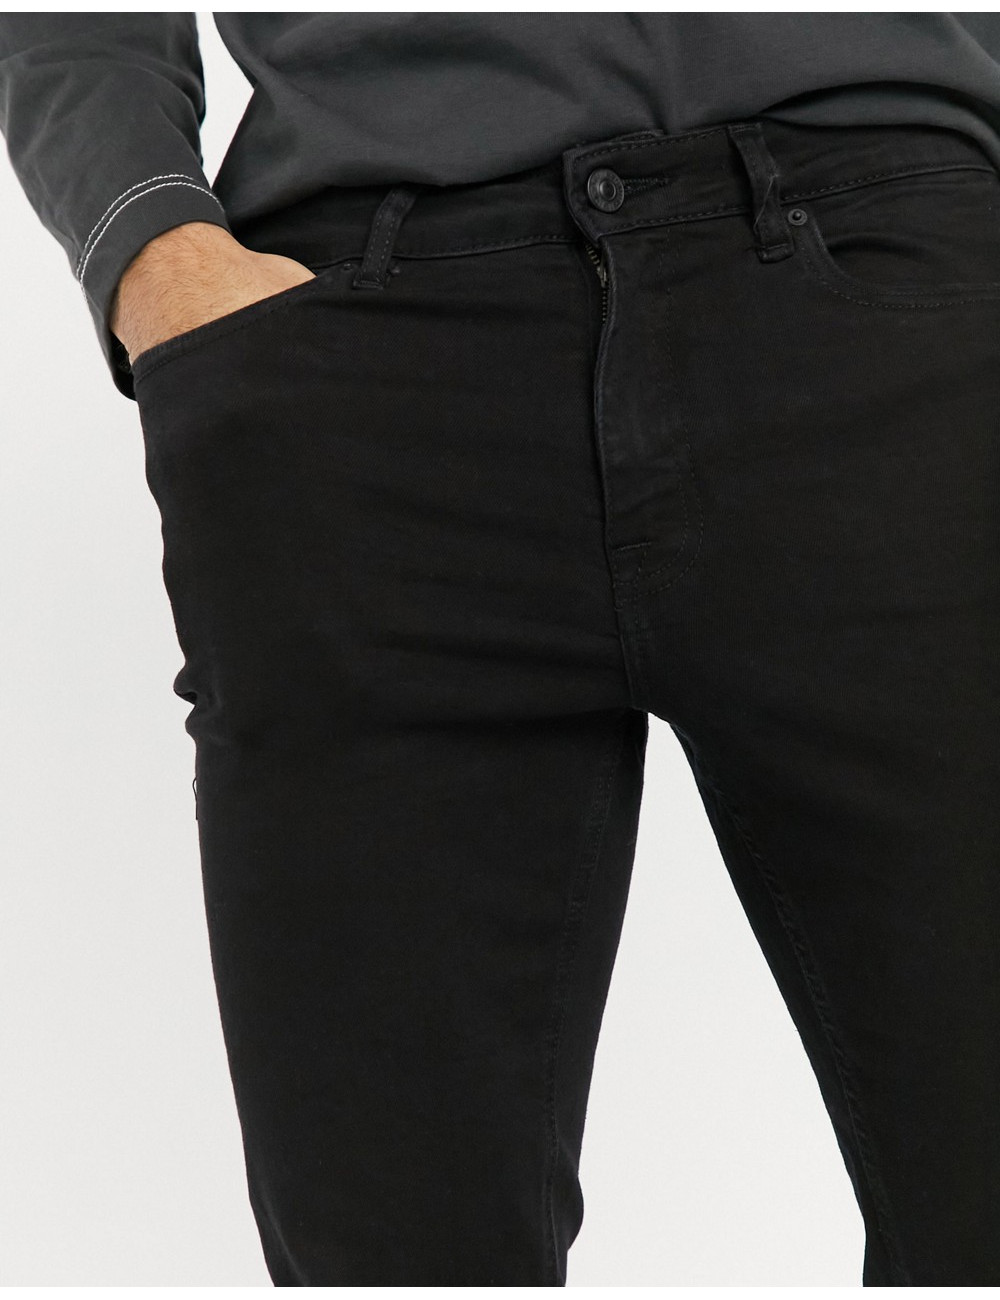 New Look skinny jeans in black